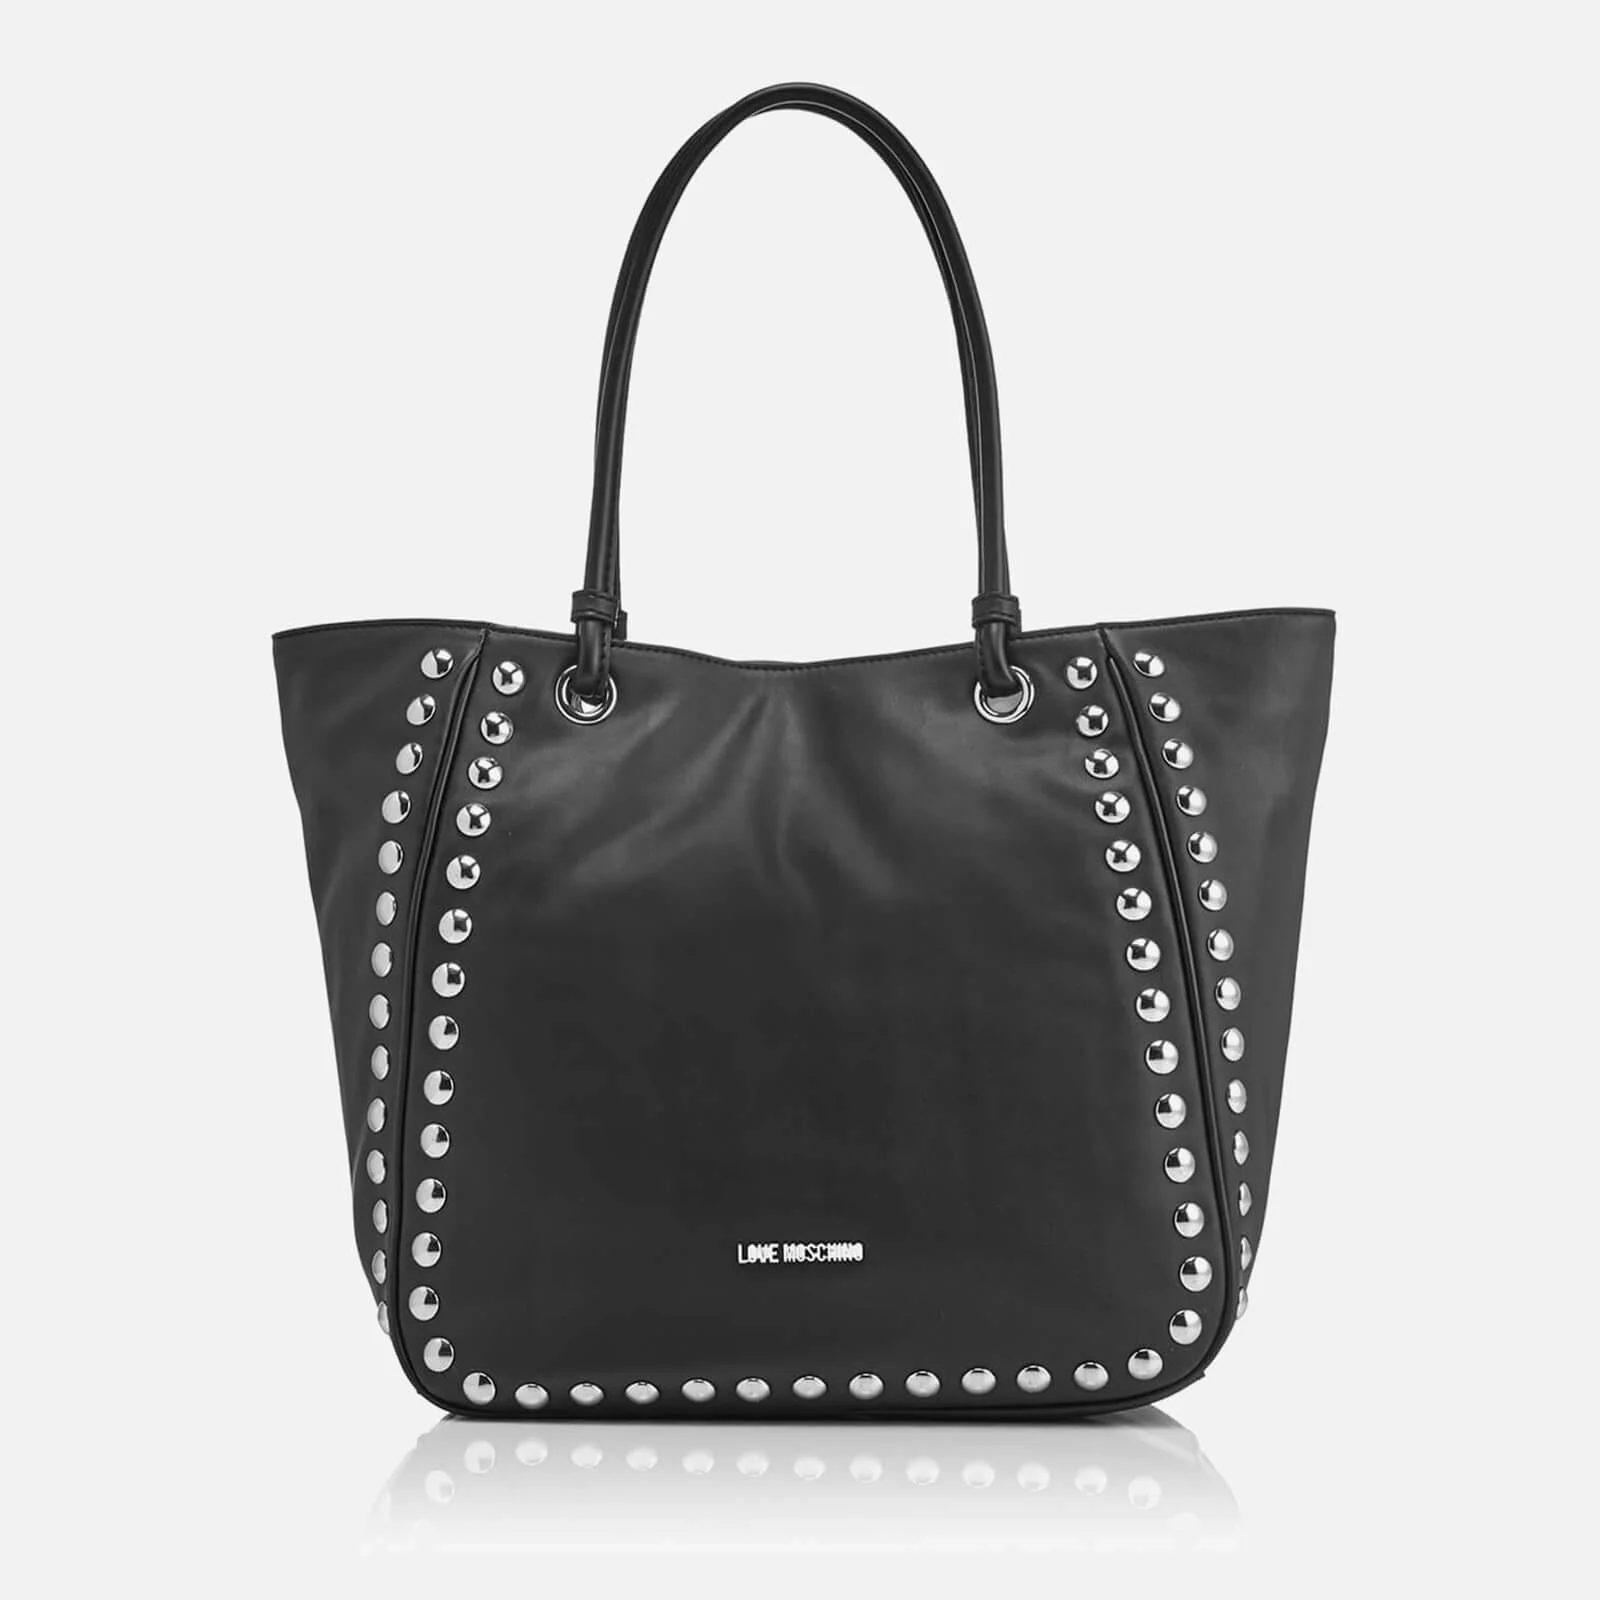 Love Moschino Women's Studs Tote Bag - Black Image 1